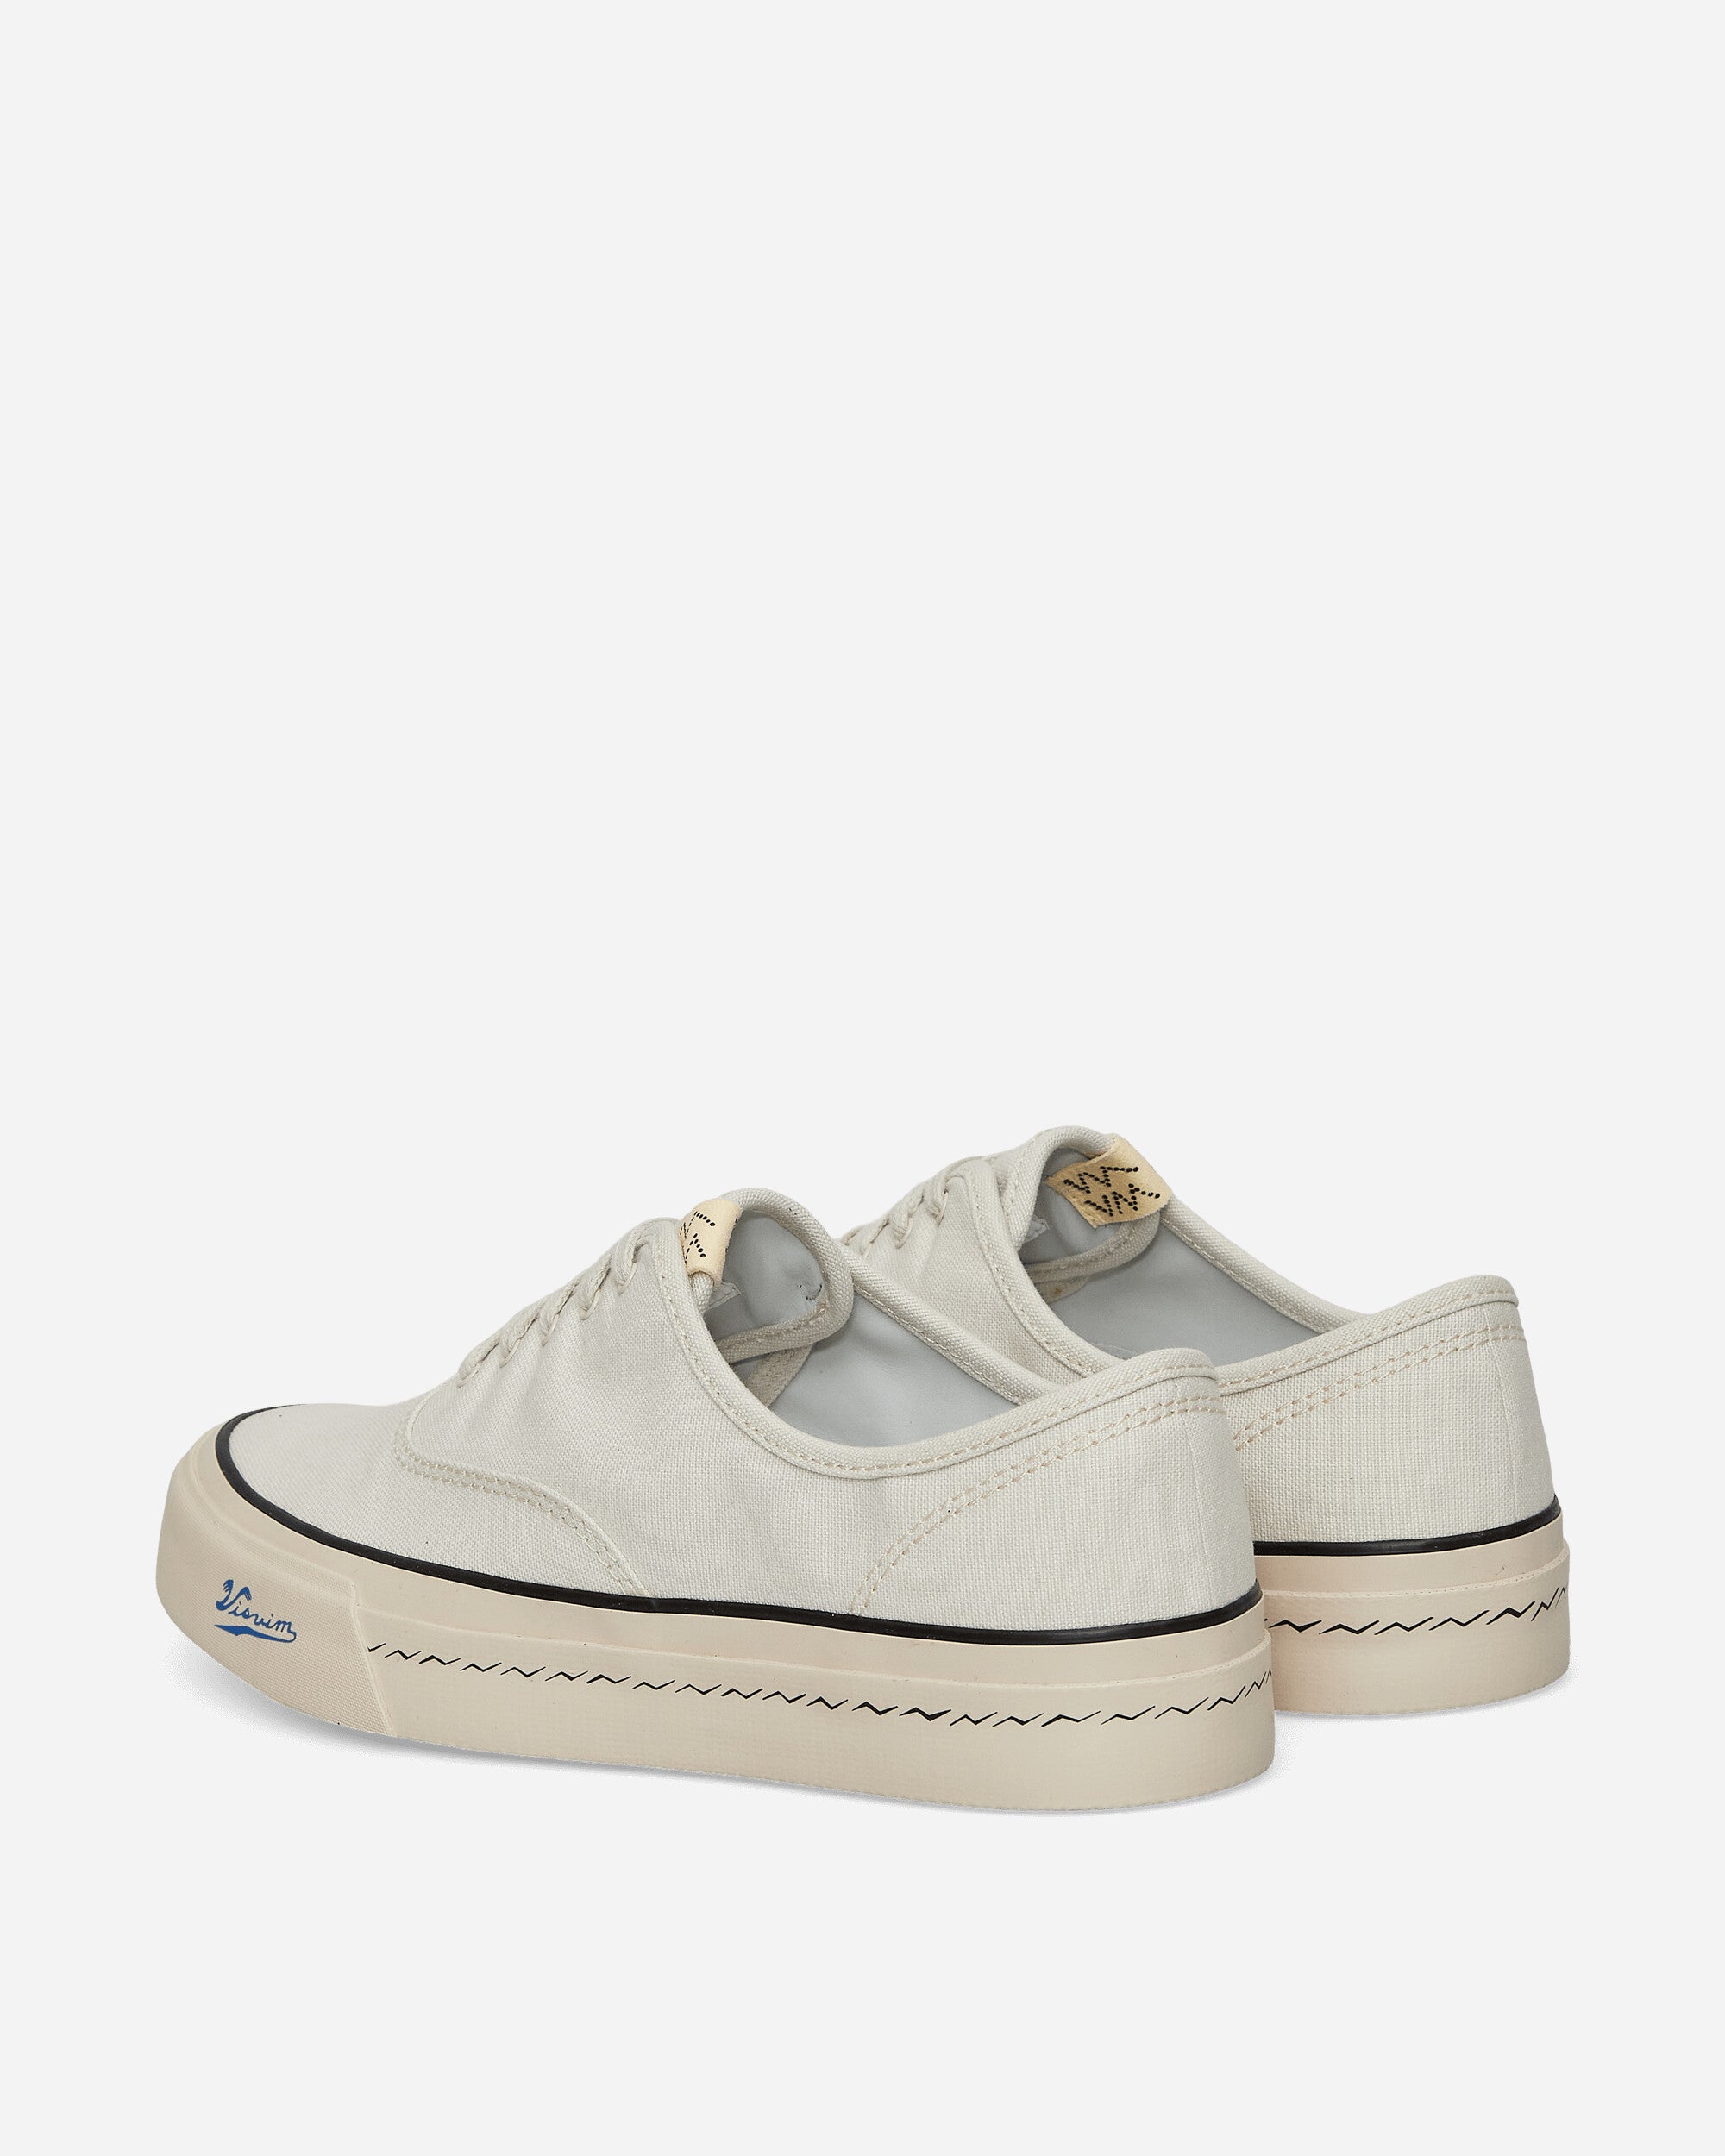 visvim Logan Deck Lo Sipe White Sneakers Slip-On 124101001004 001